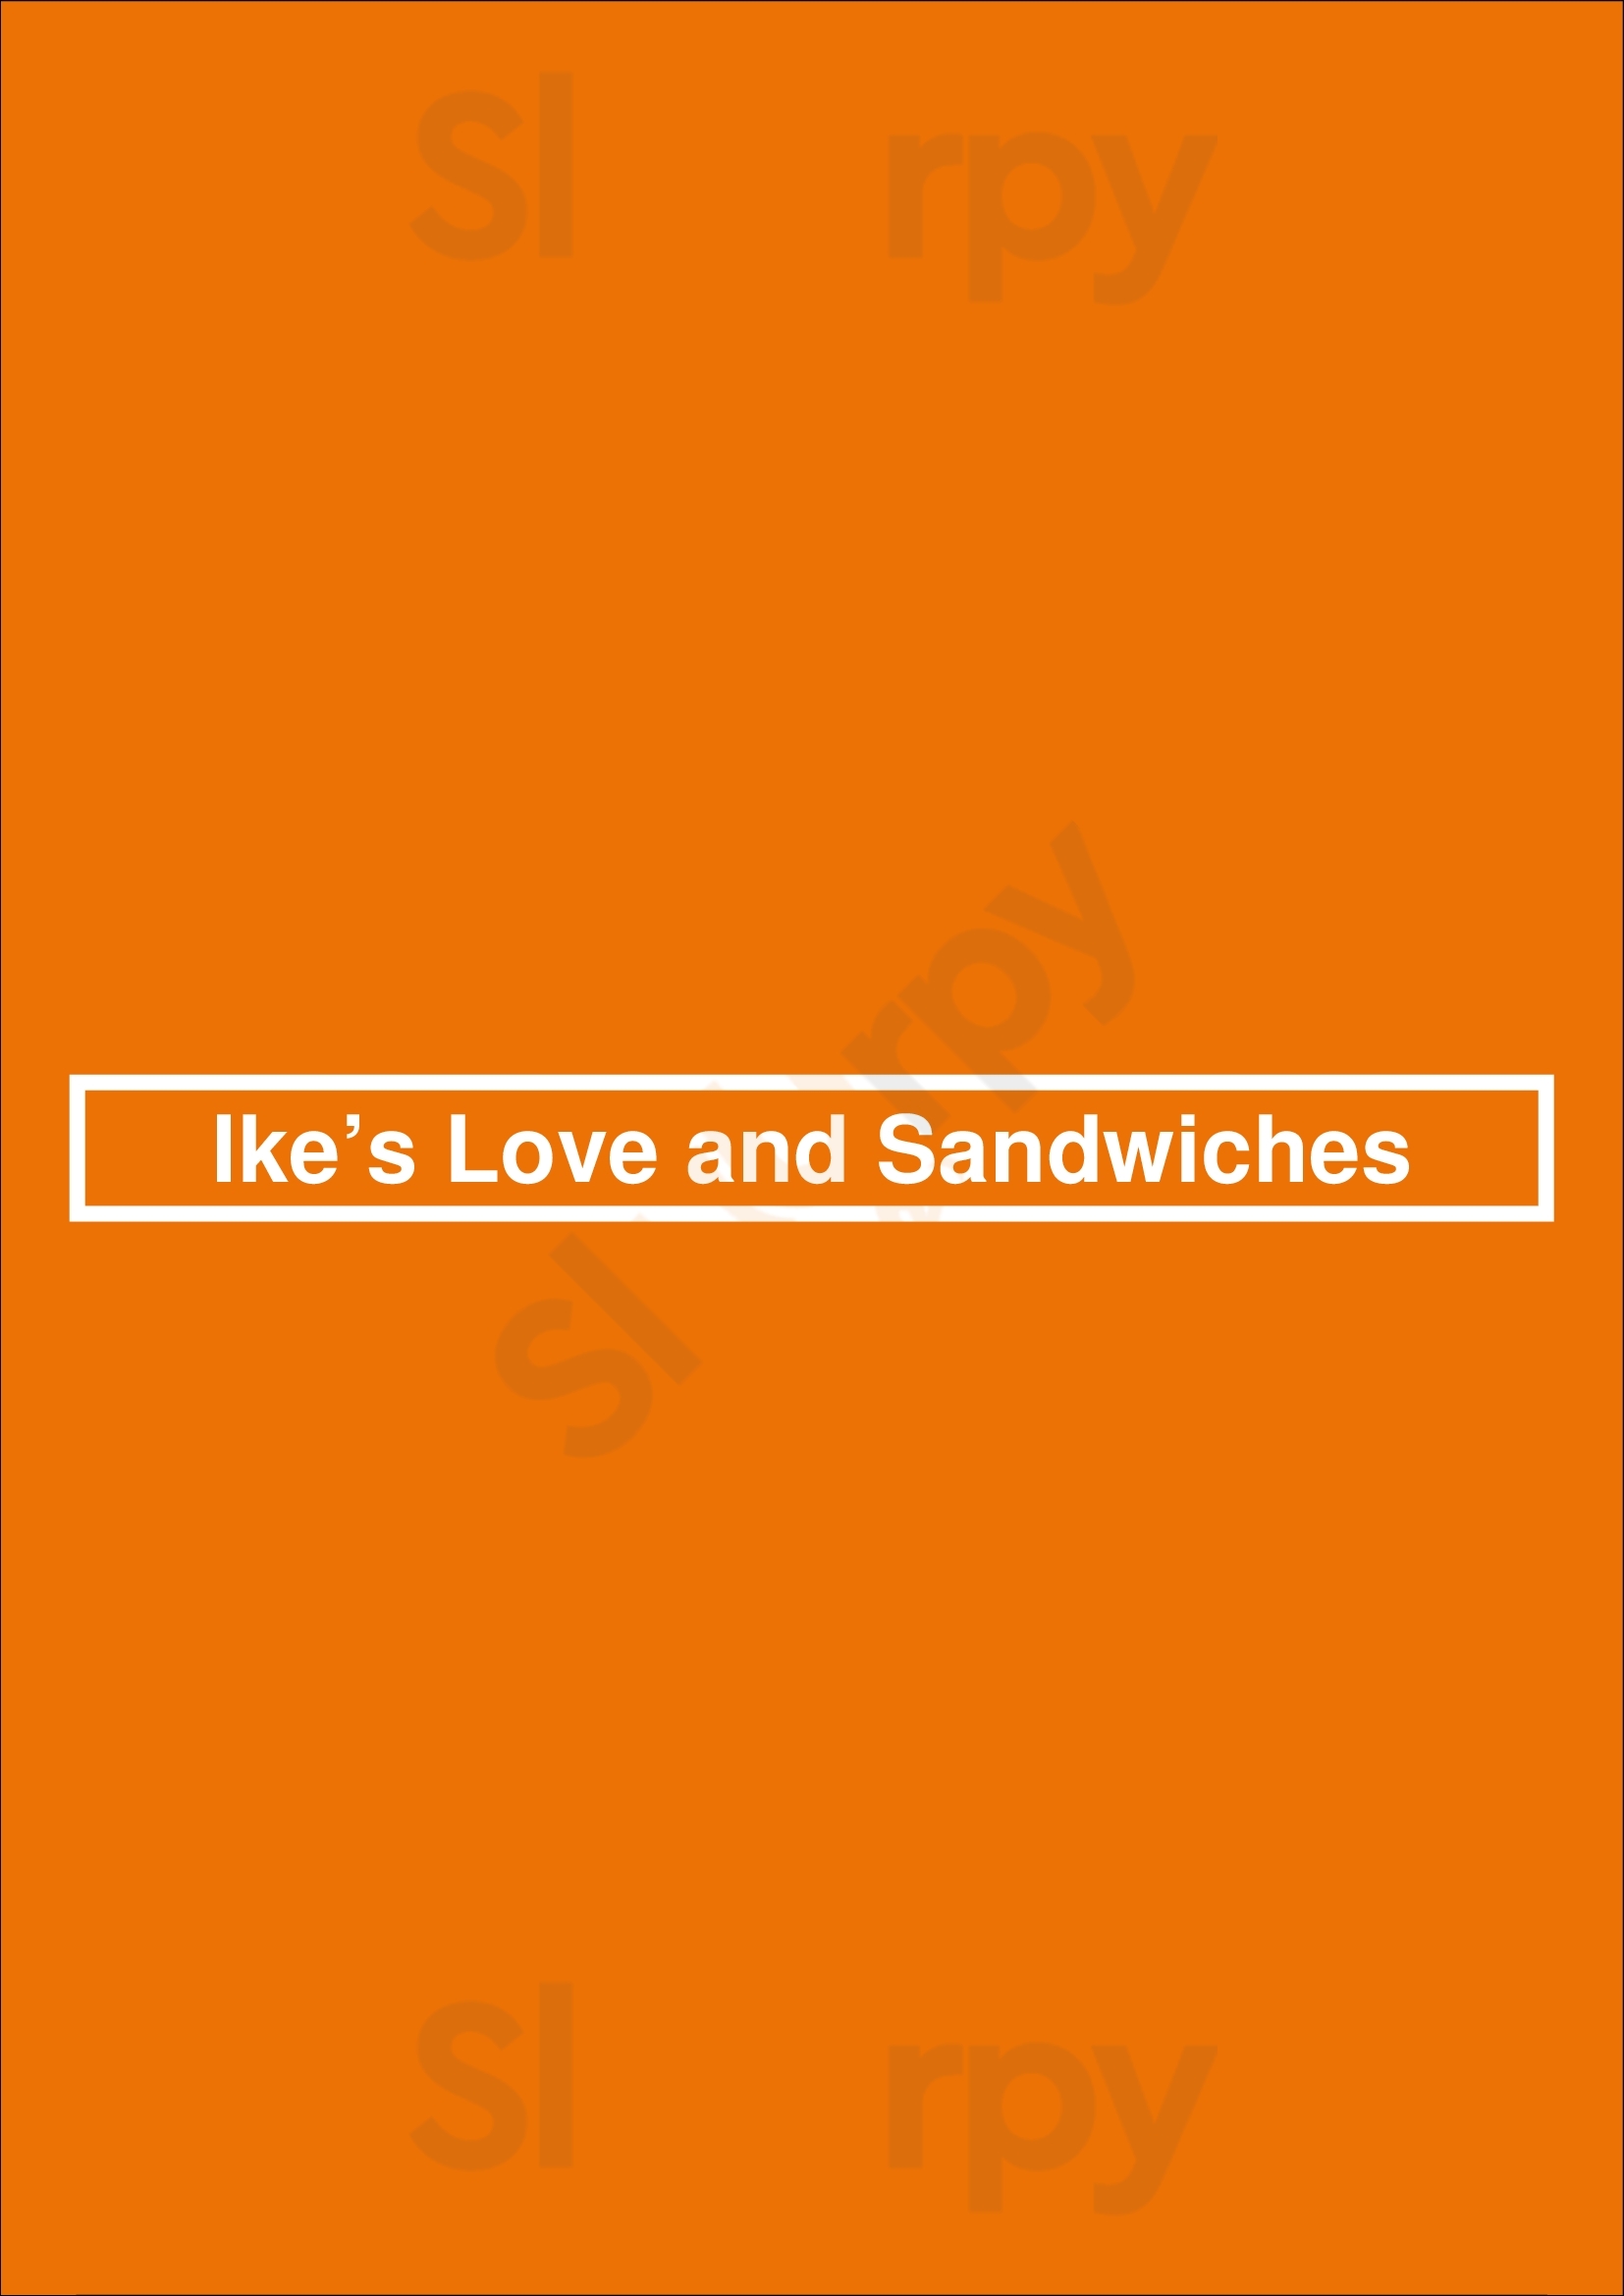 Ike’s Love And Sandwiches Las Vegas Menu - 1